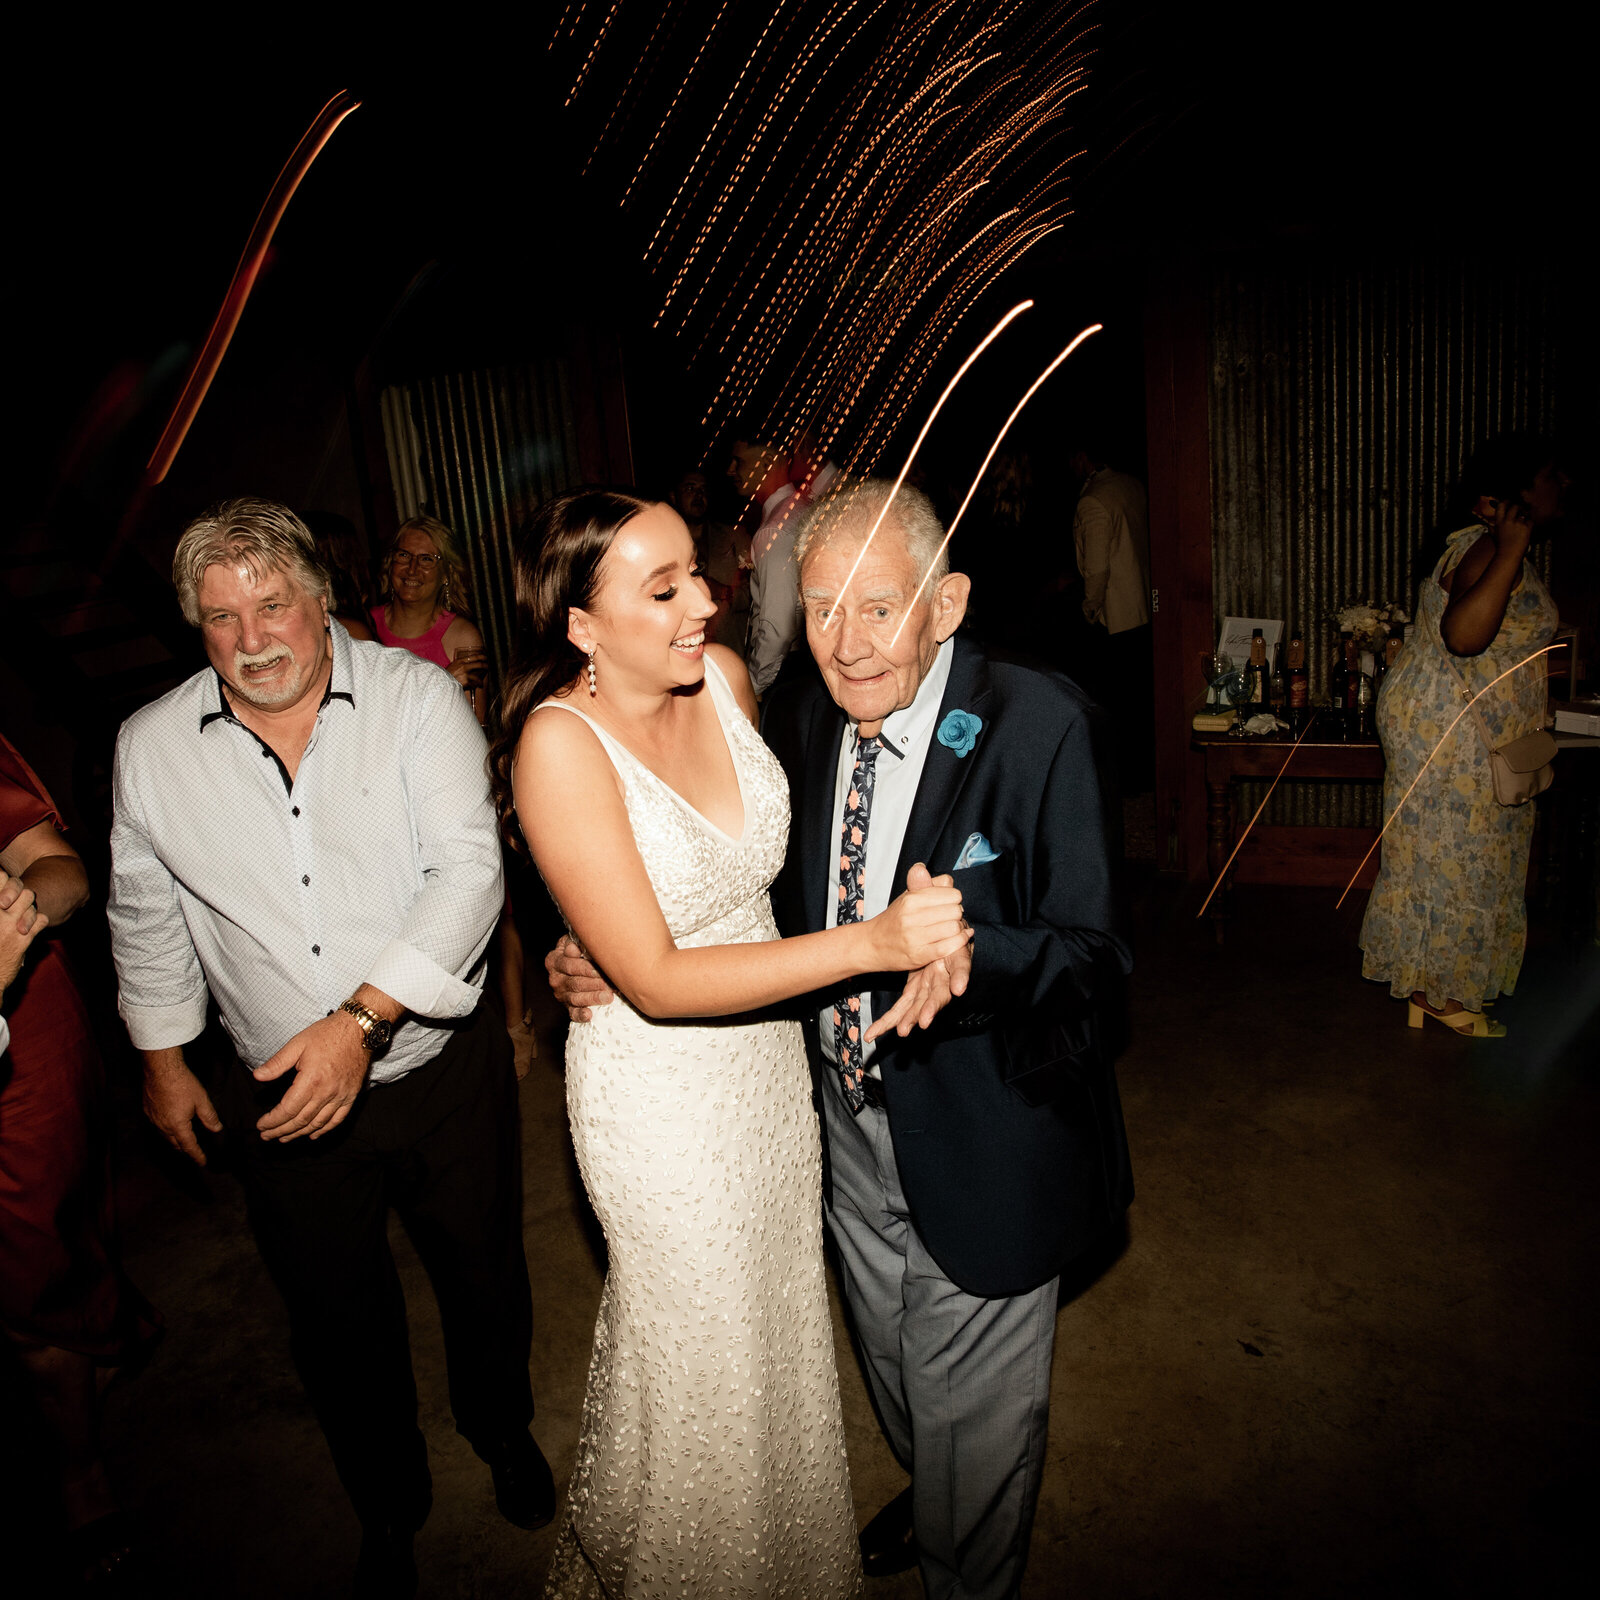 Caitlin-Reece-Rexvil-Photography-Adelaide-Wedding-Photographer-759